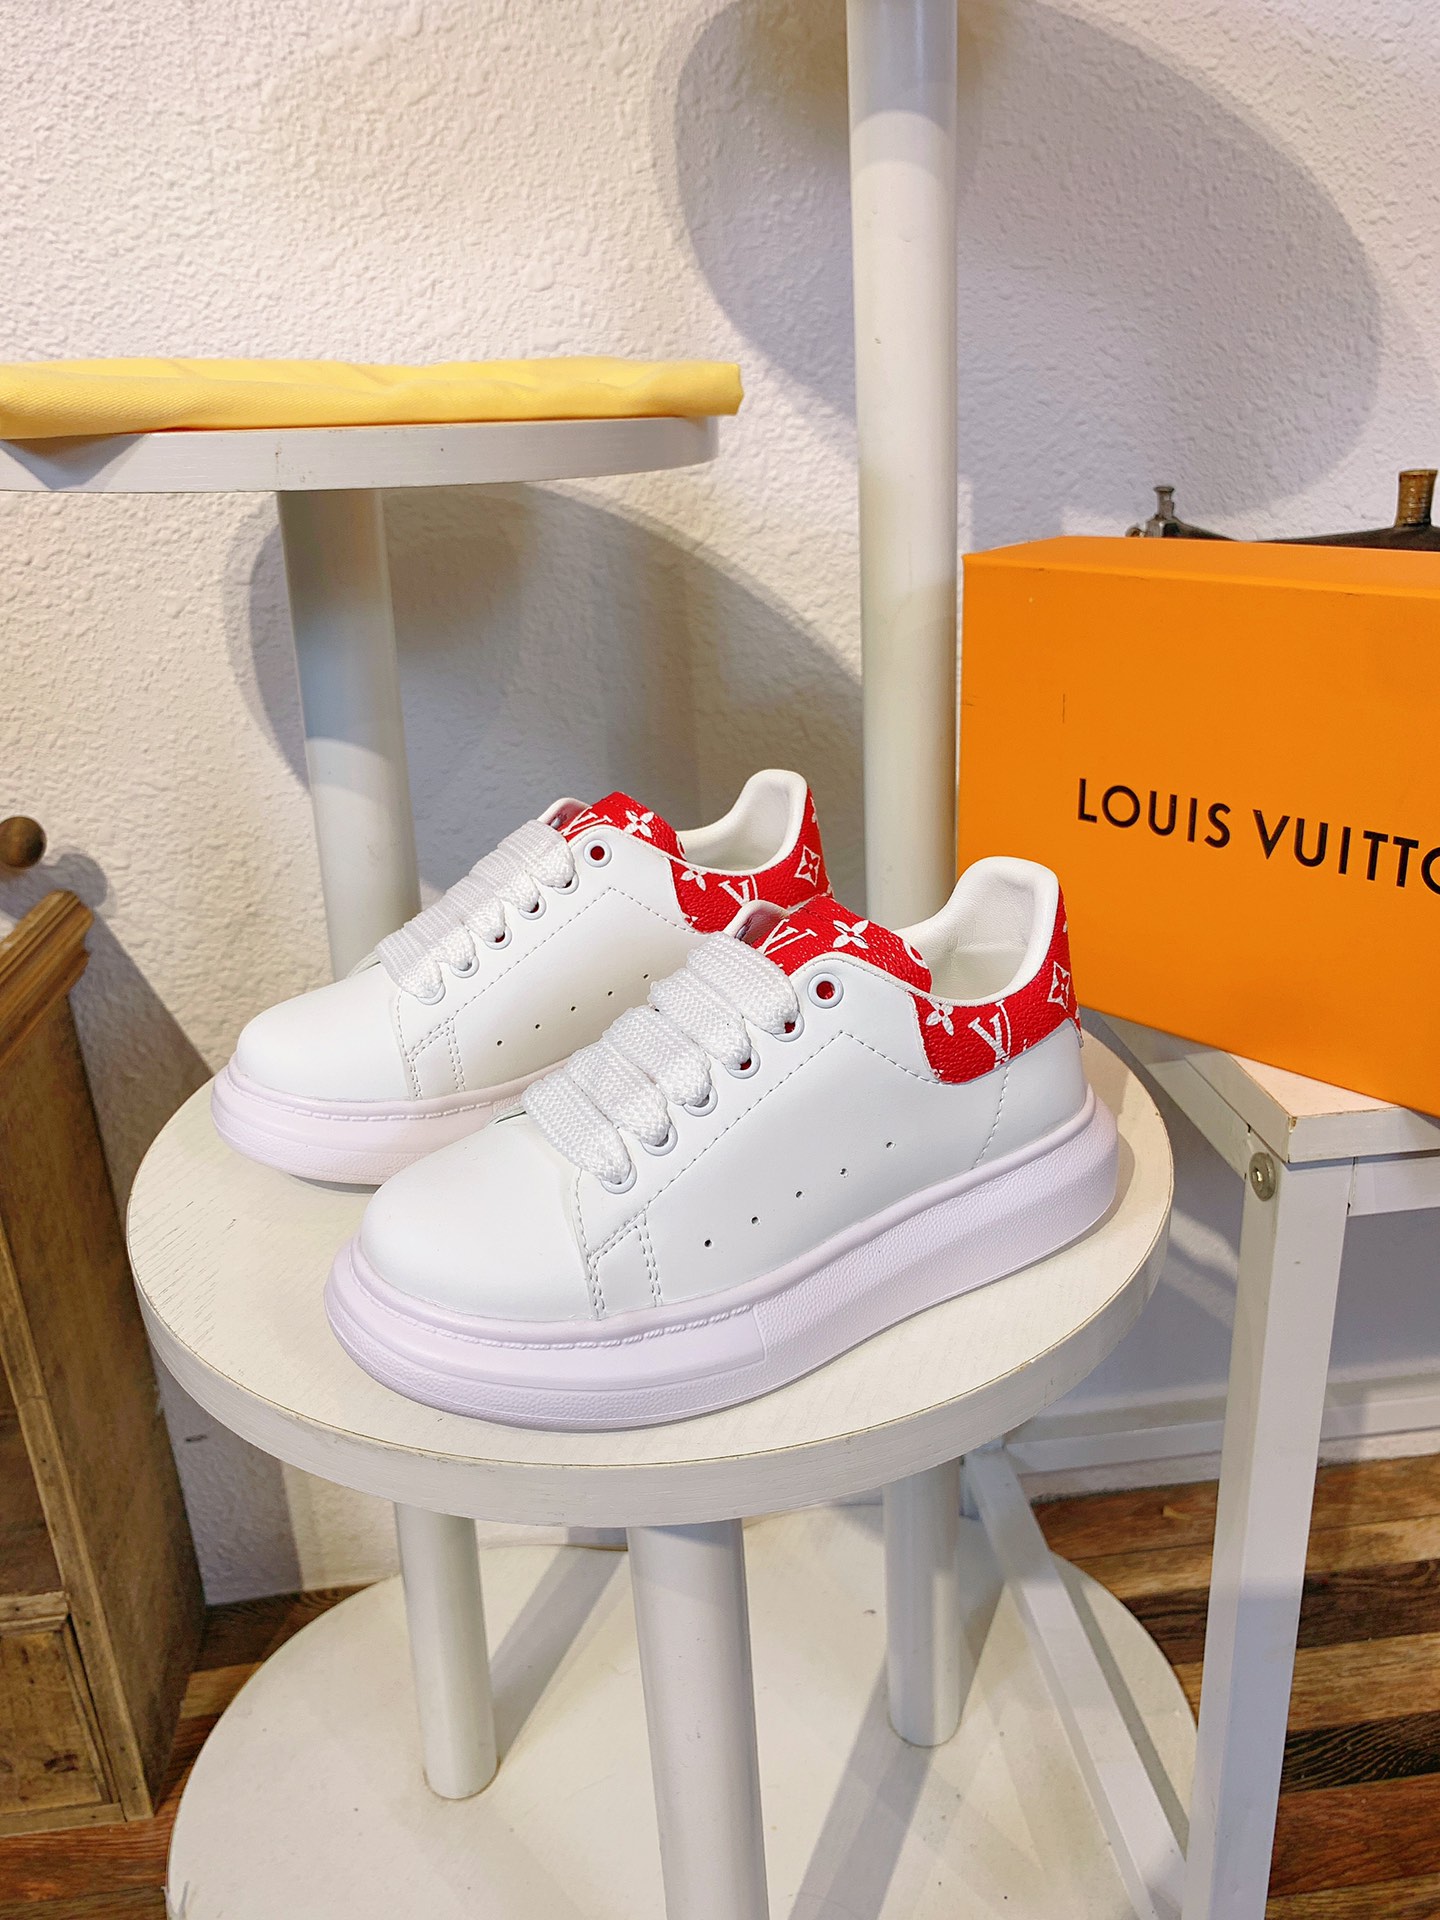 Louis Vuitton Skateboard Shoes Kids Shoes White Kids Sheepskin Fashion